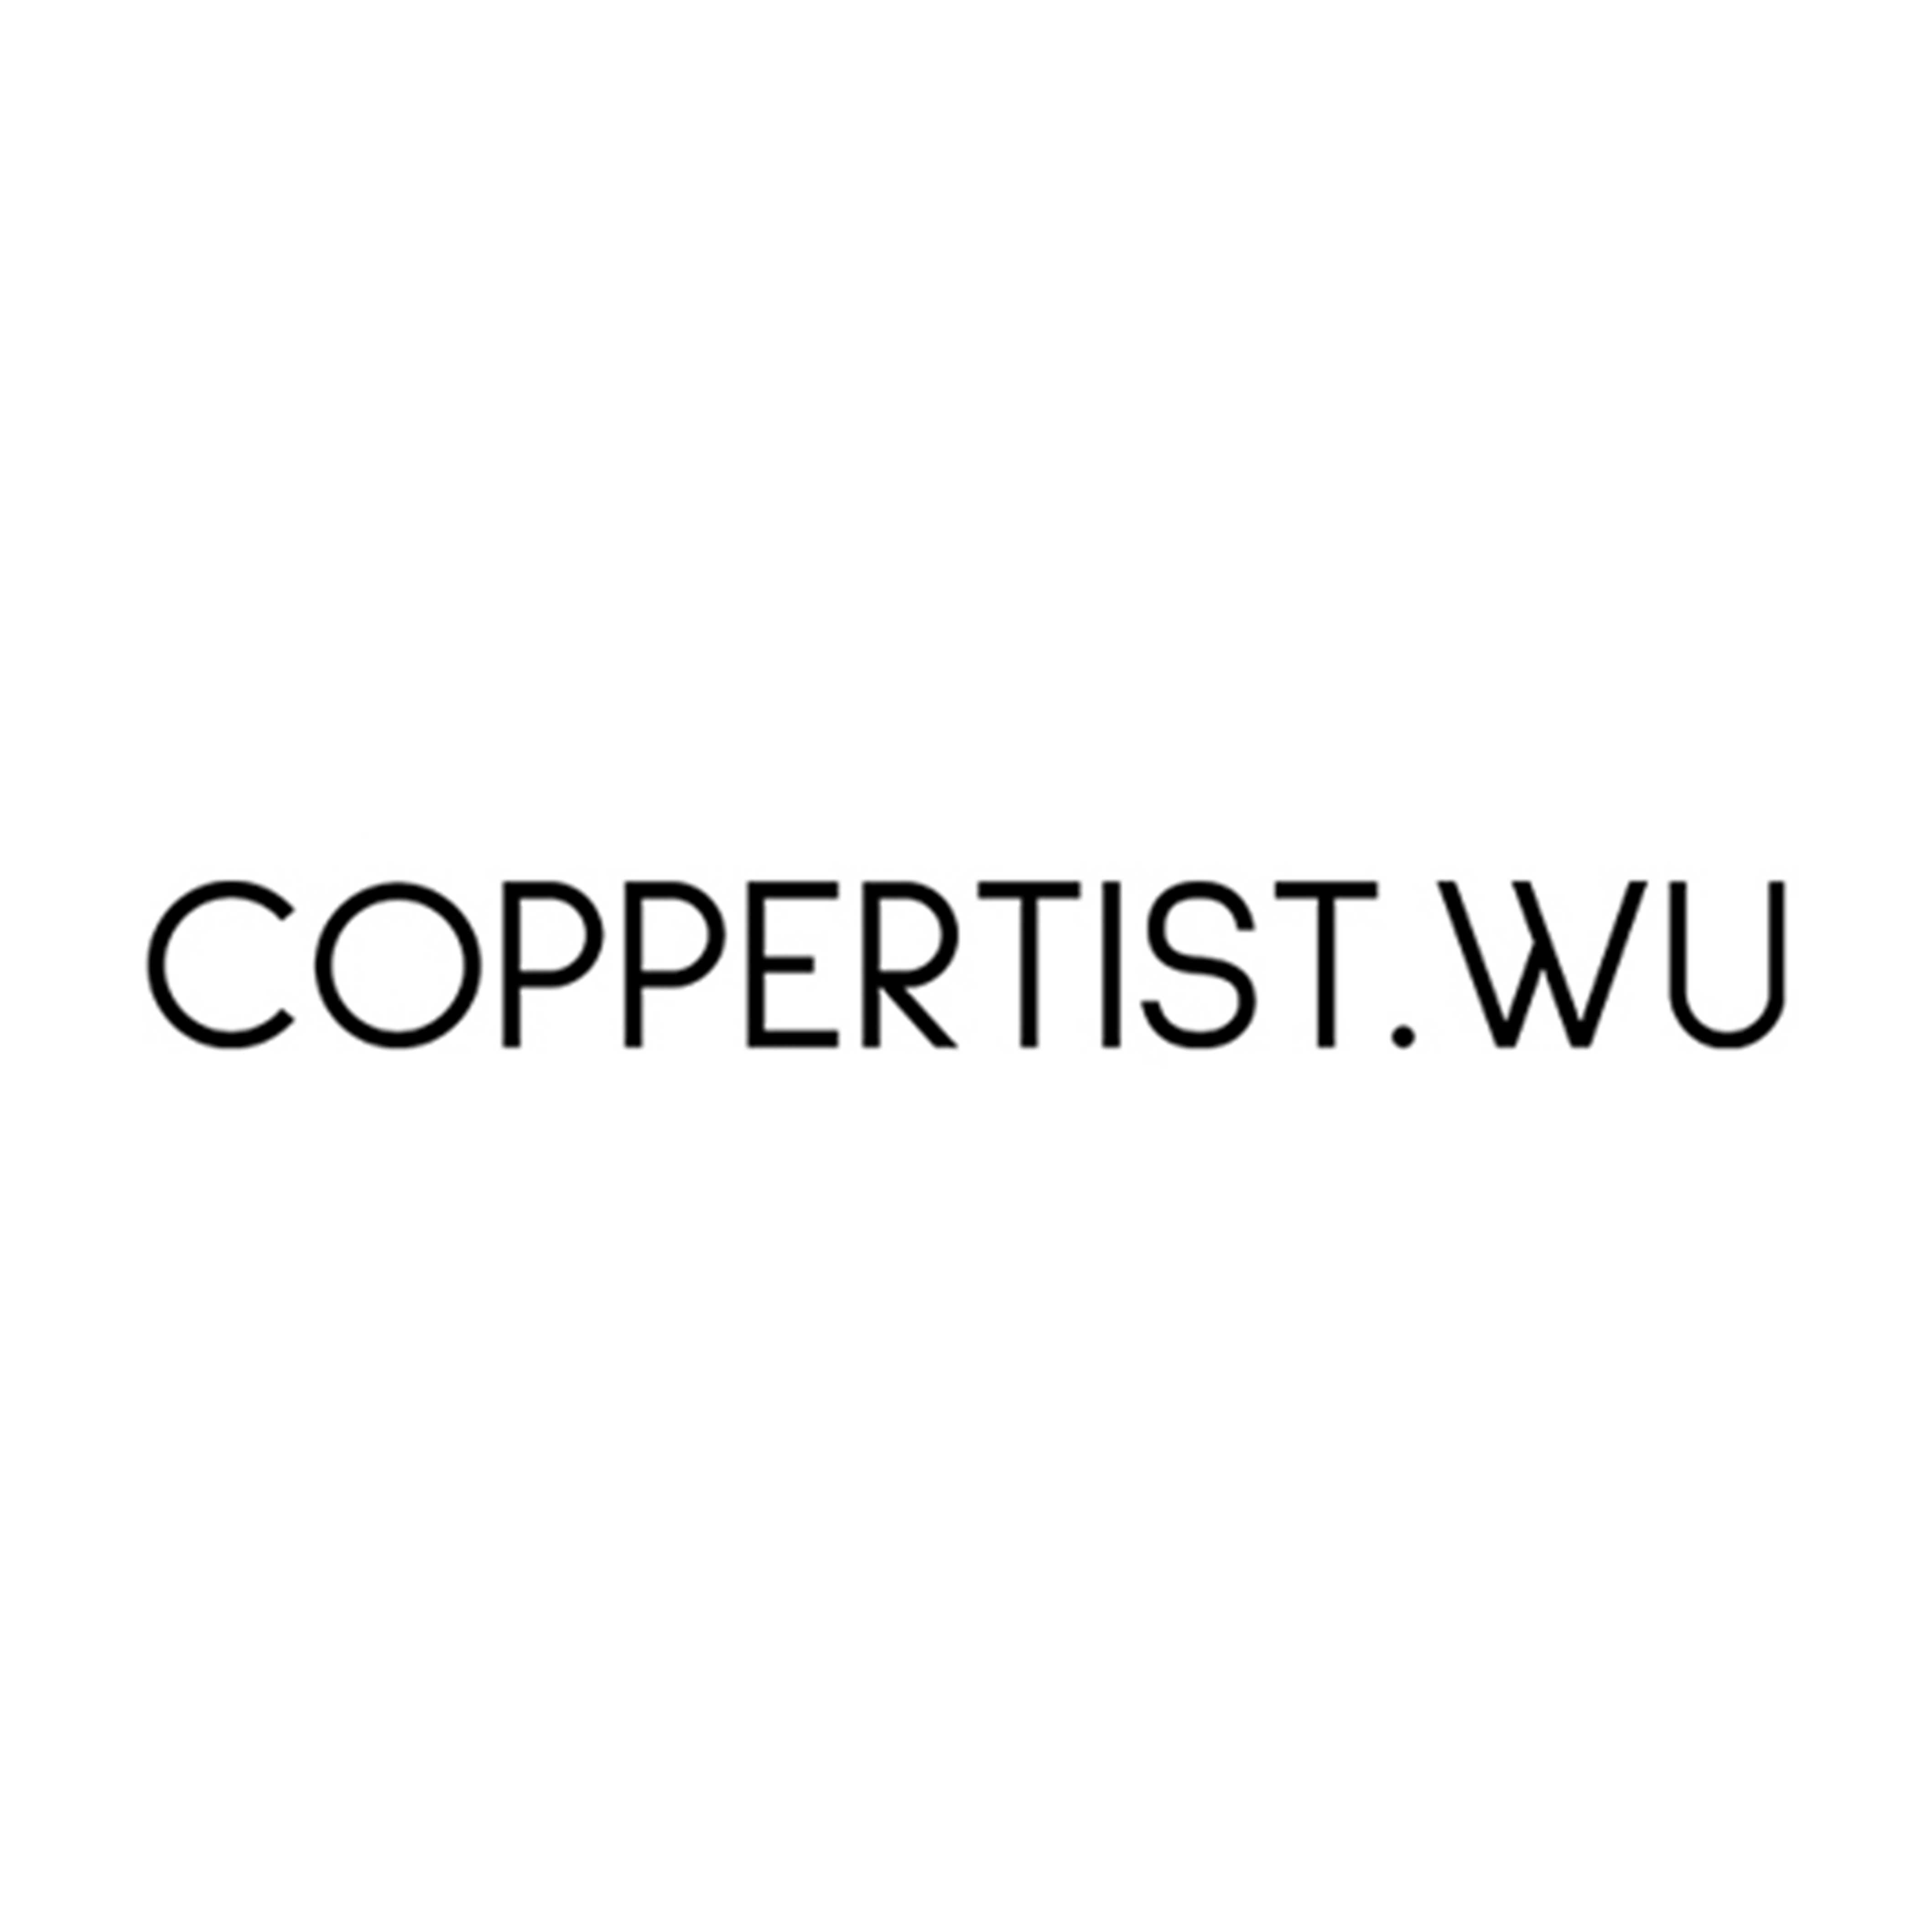 Shop Coppertist.Wu logo